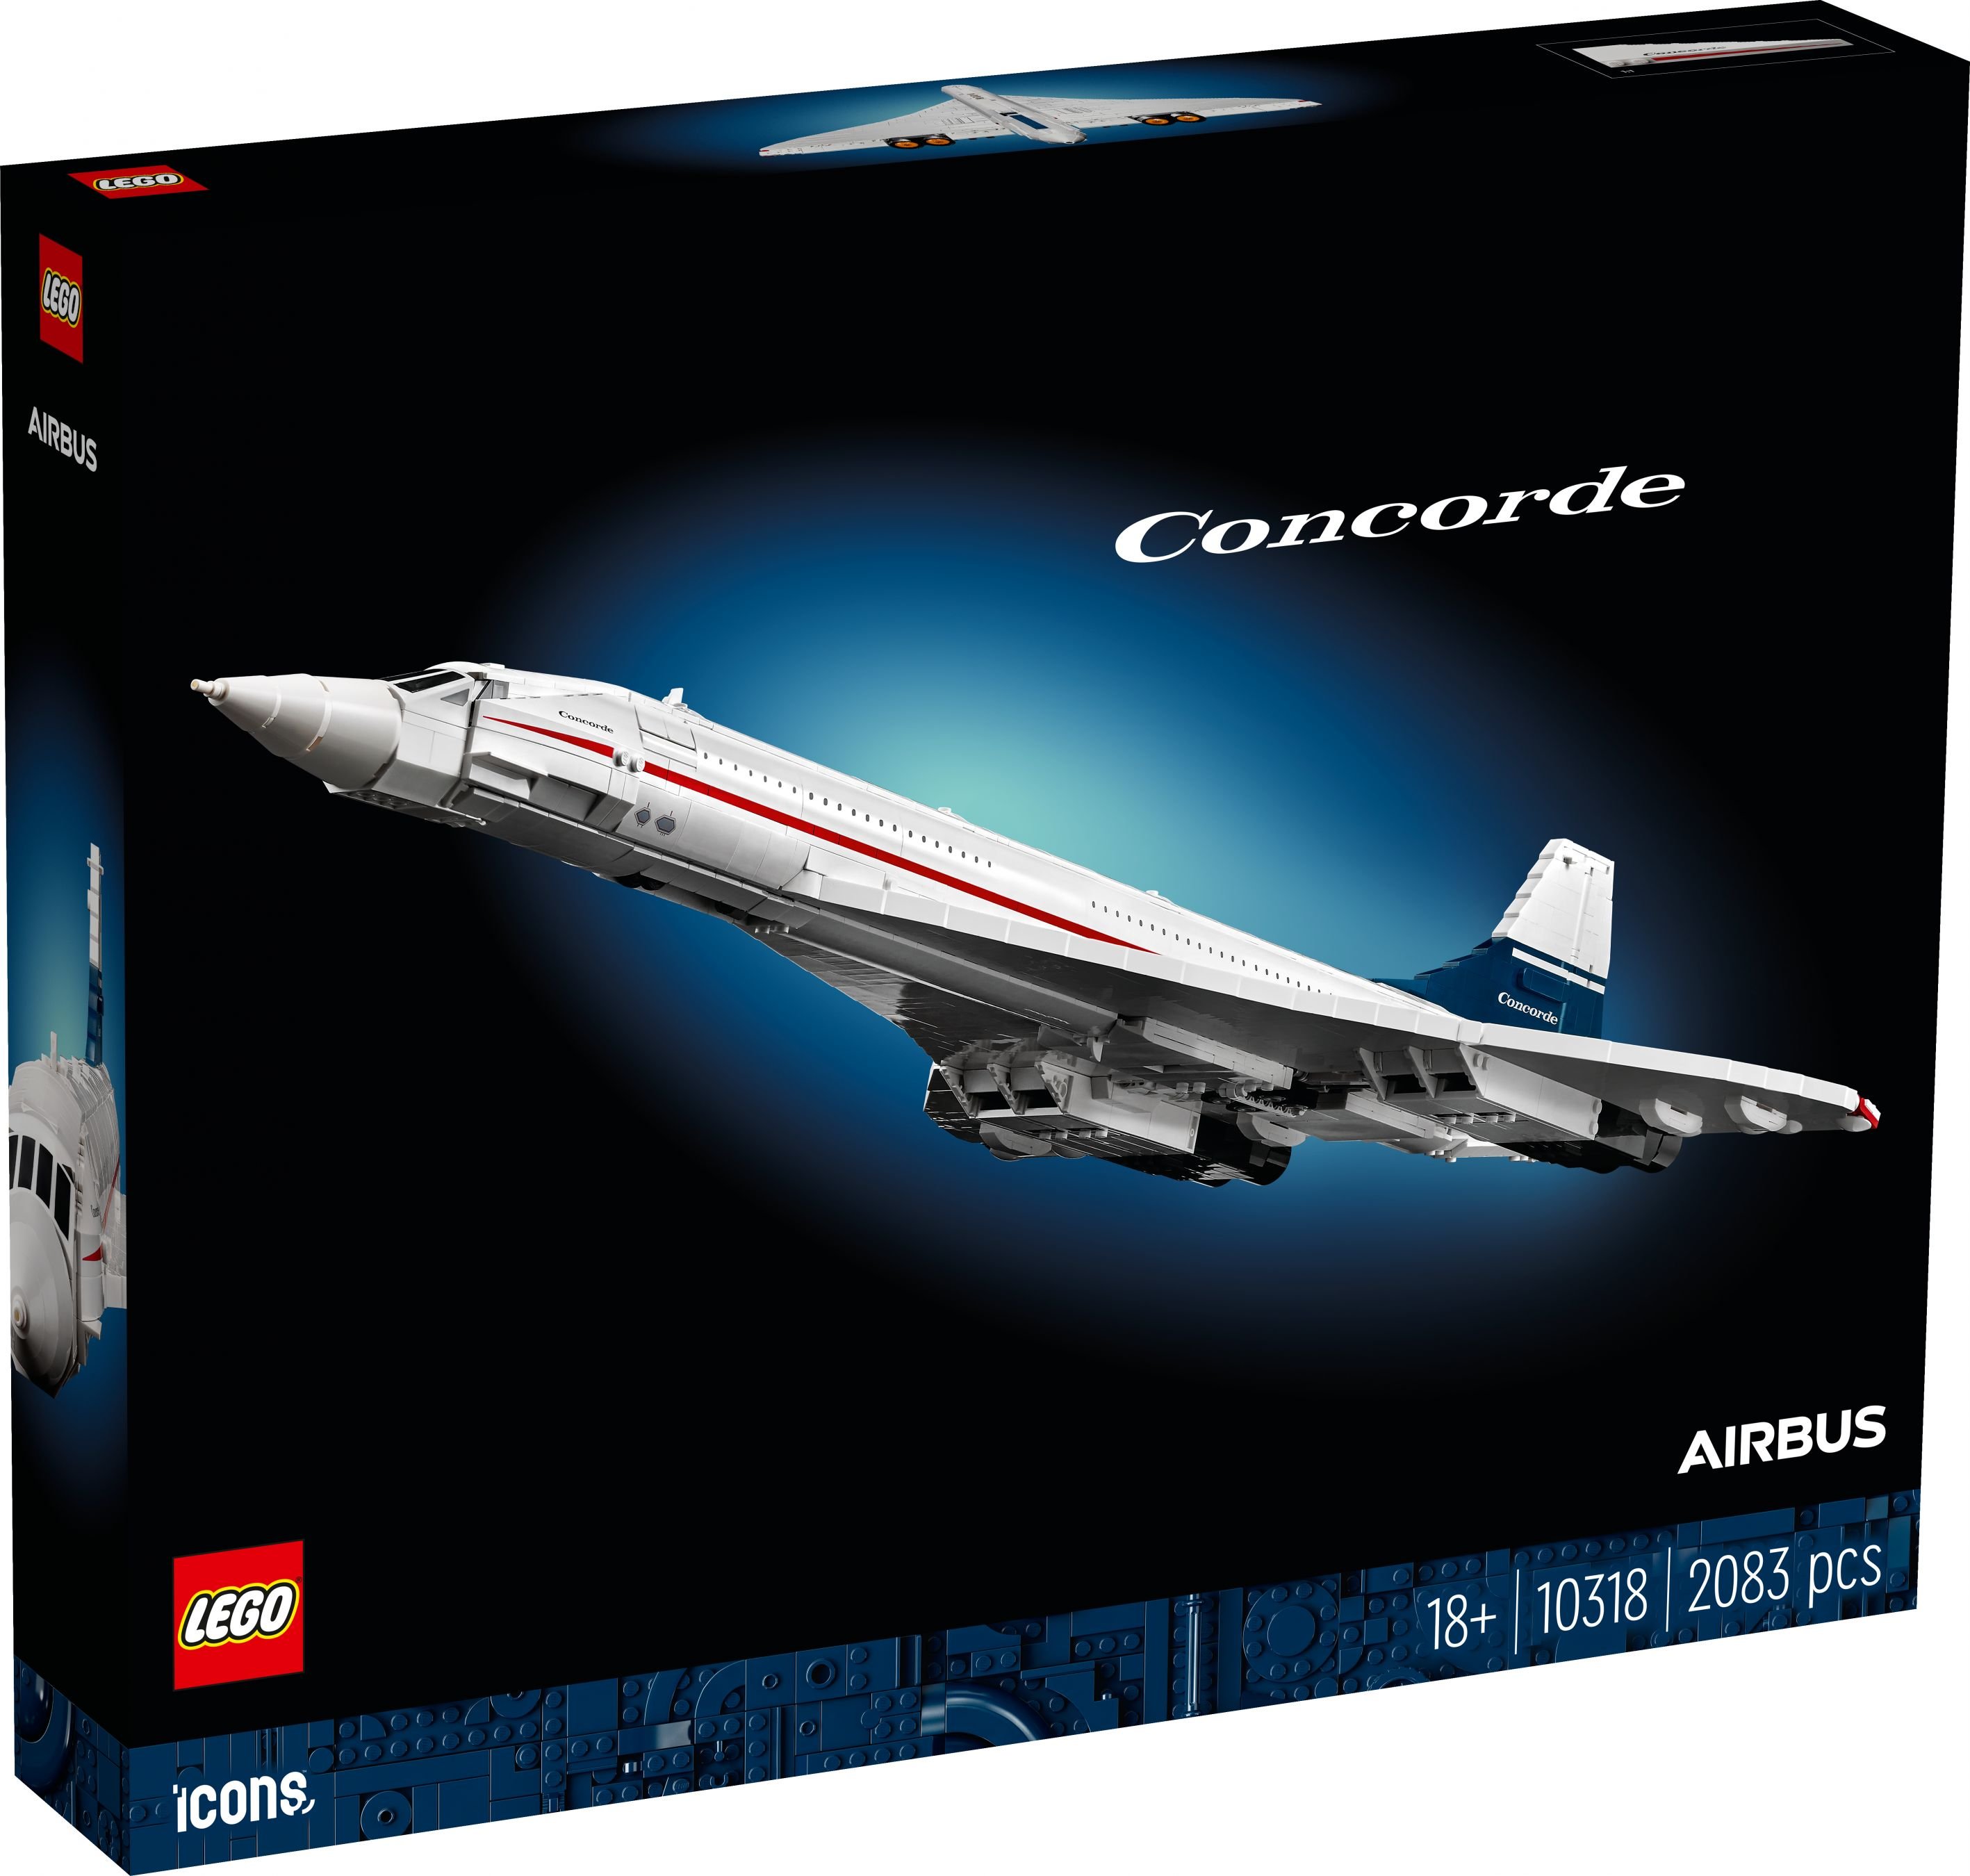 LEGO Advanced Models 10318 Concorde LEGO_10318_Box1_v29.jpg